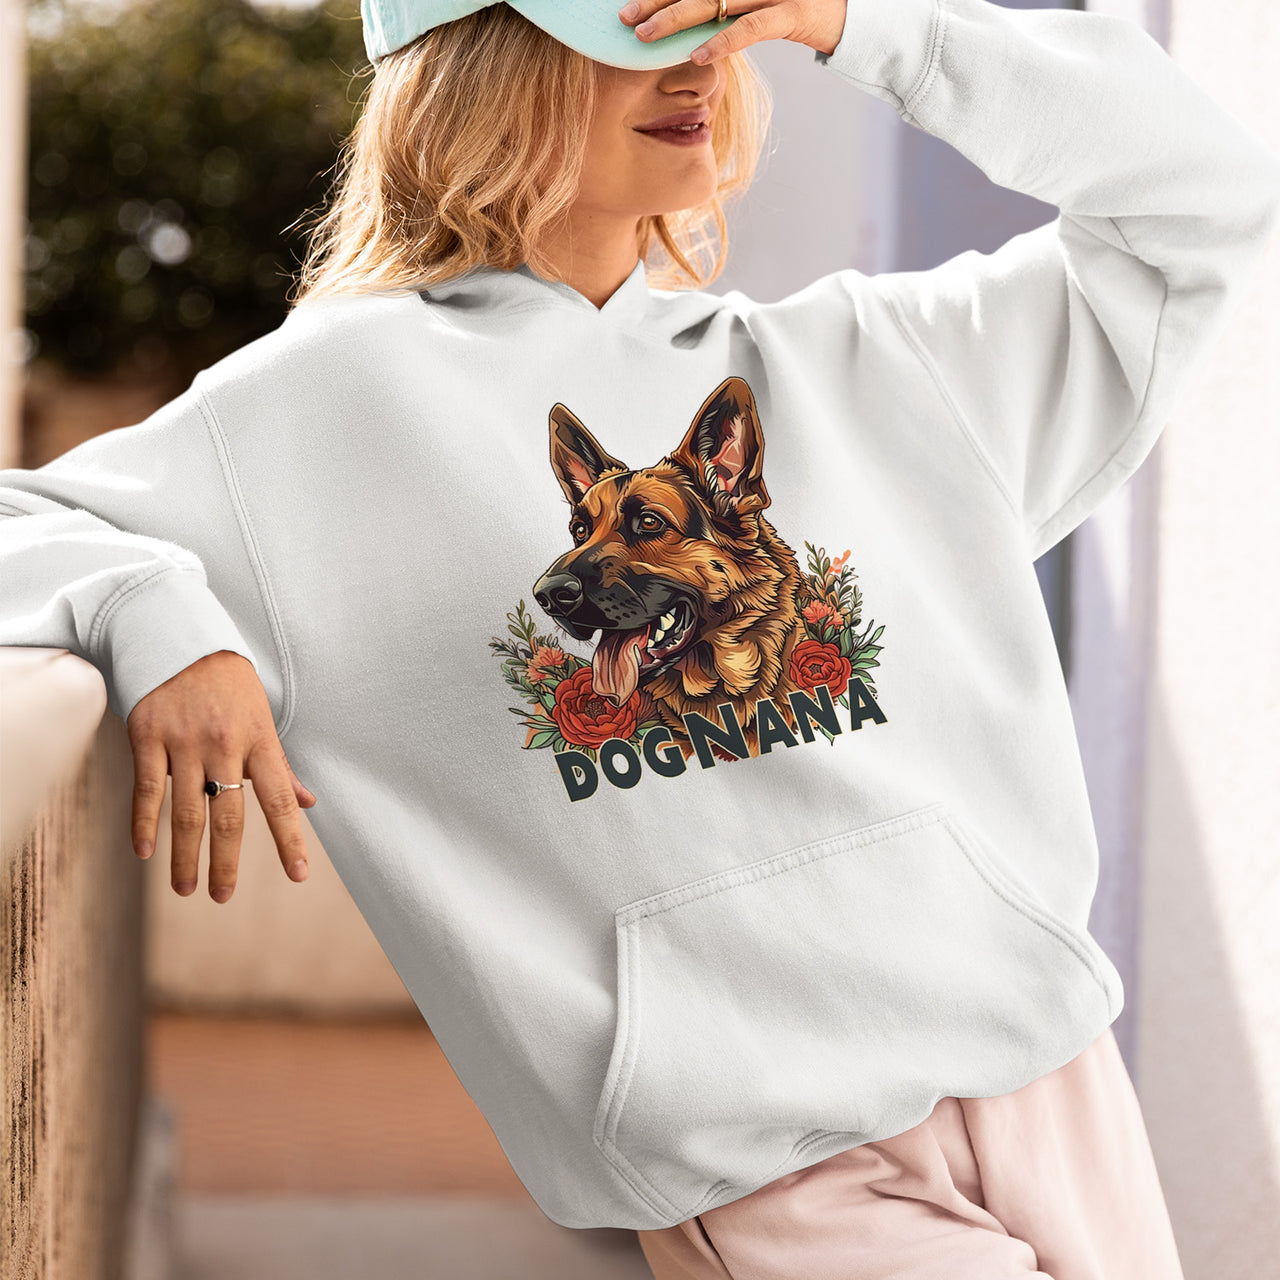 German Shepherd Dog T-shirt, Pet Lover Shirt, Dog Lover Shirt, Dog Nana T-Shirt T-Shirt, Dog Owner Shirt, Gift For Dog Grandma, Funny Dog Shirts, Women Dog T-Shirt, Mother's Day Gift, Dog Lover Wife Gifts, Dog Shirt